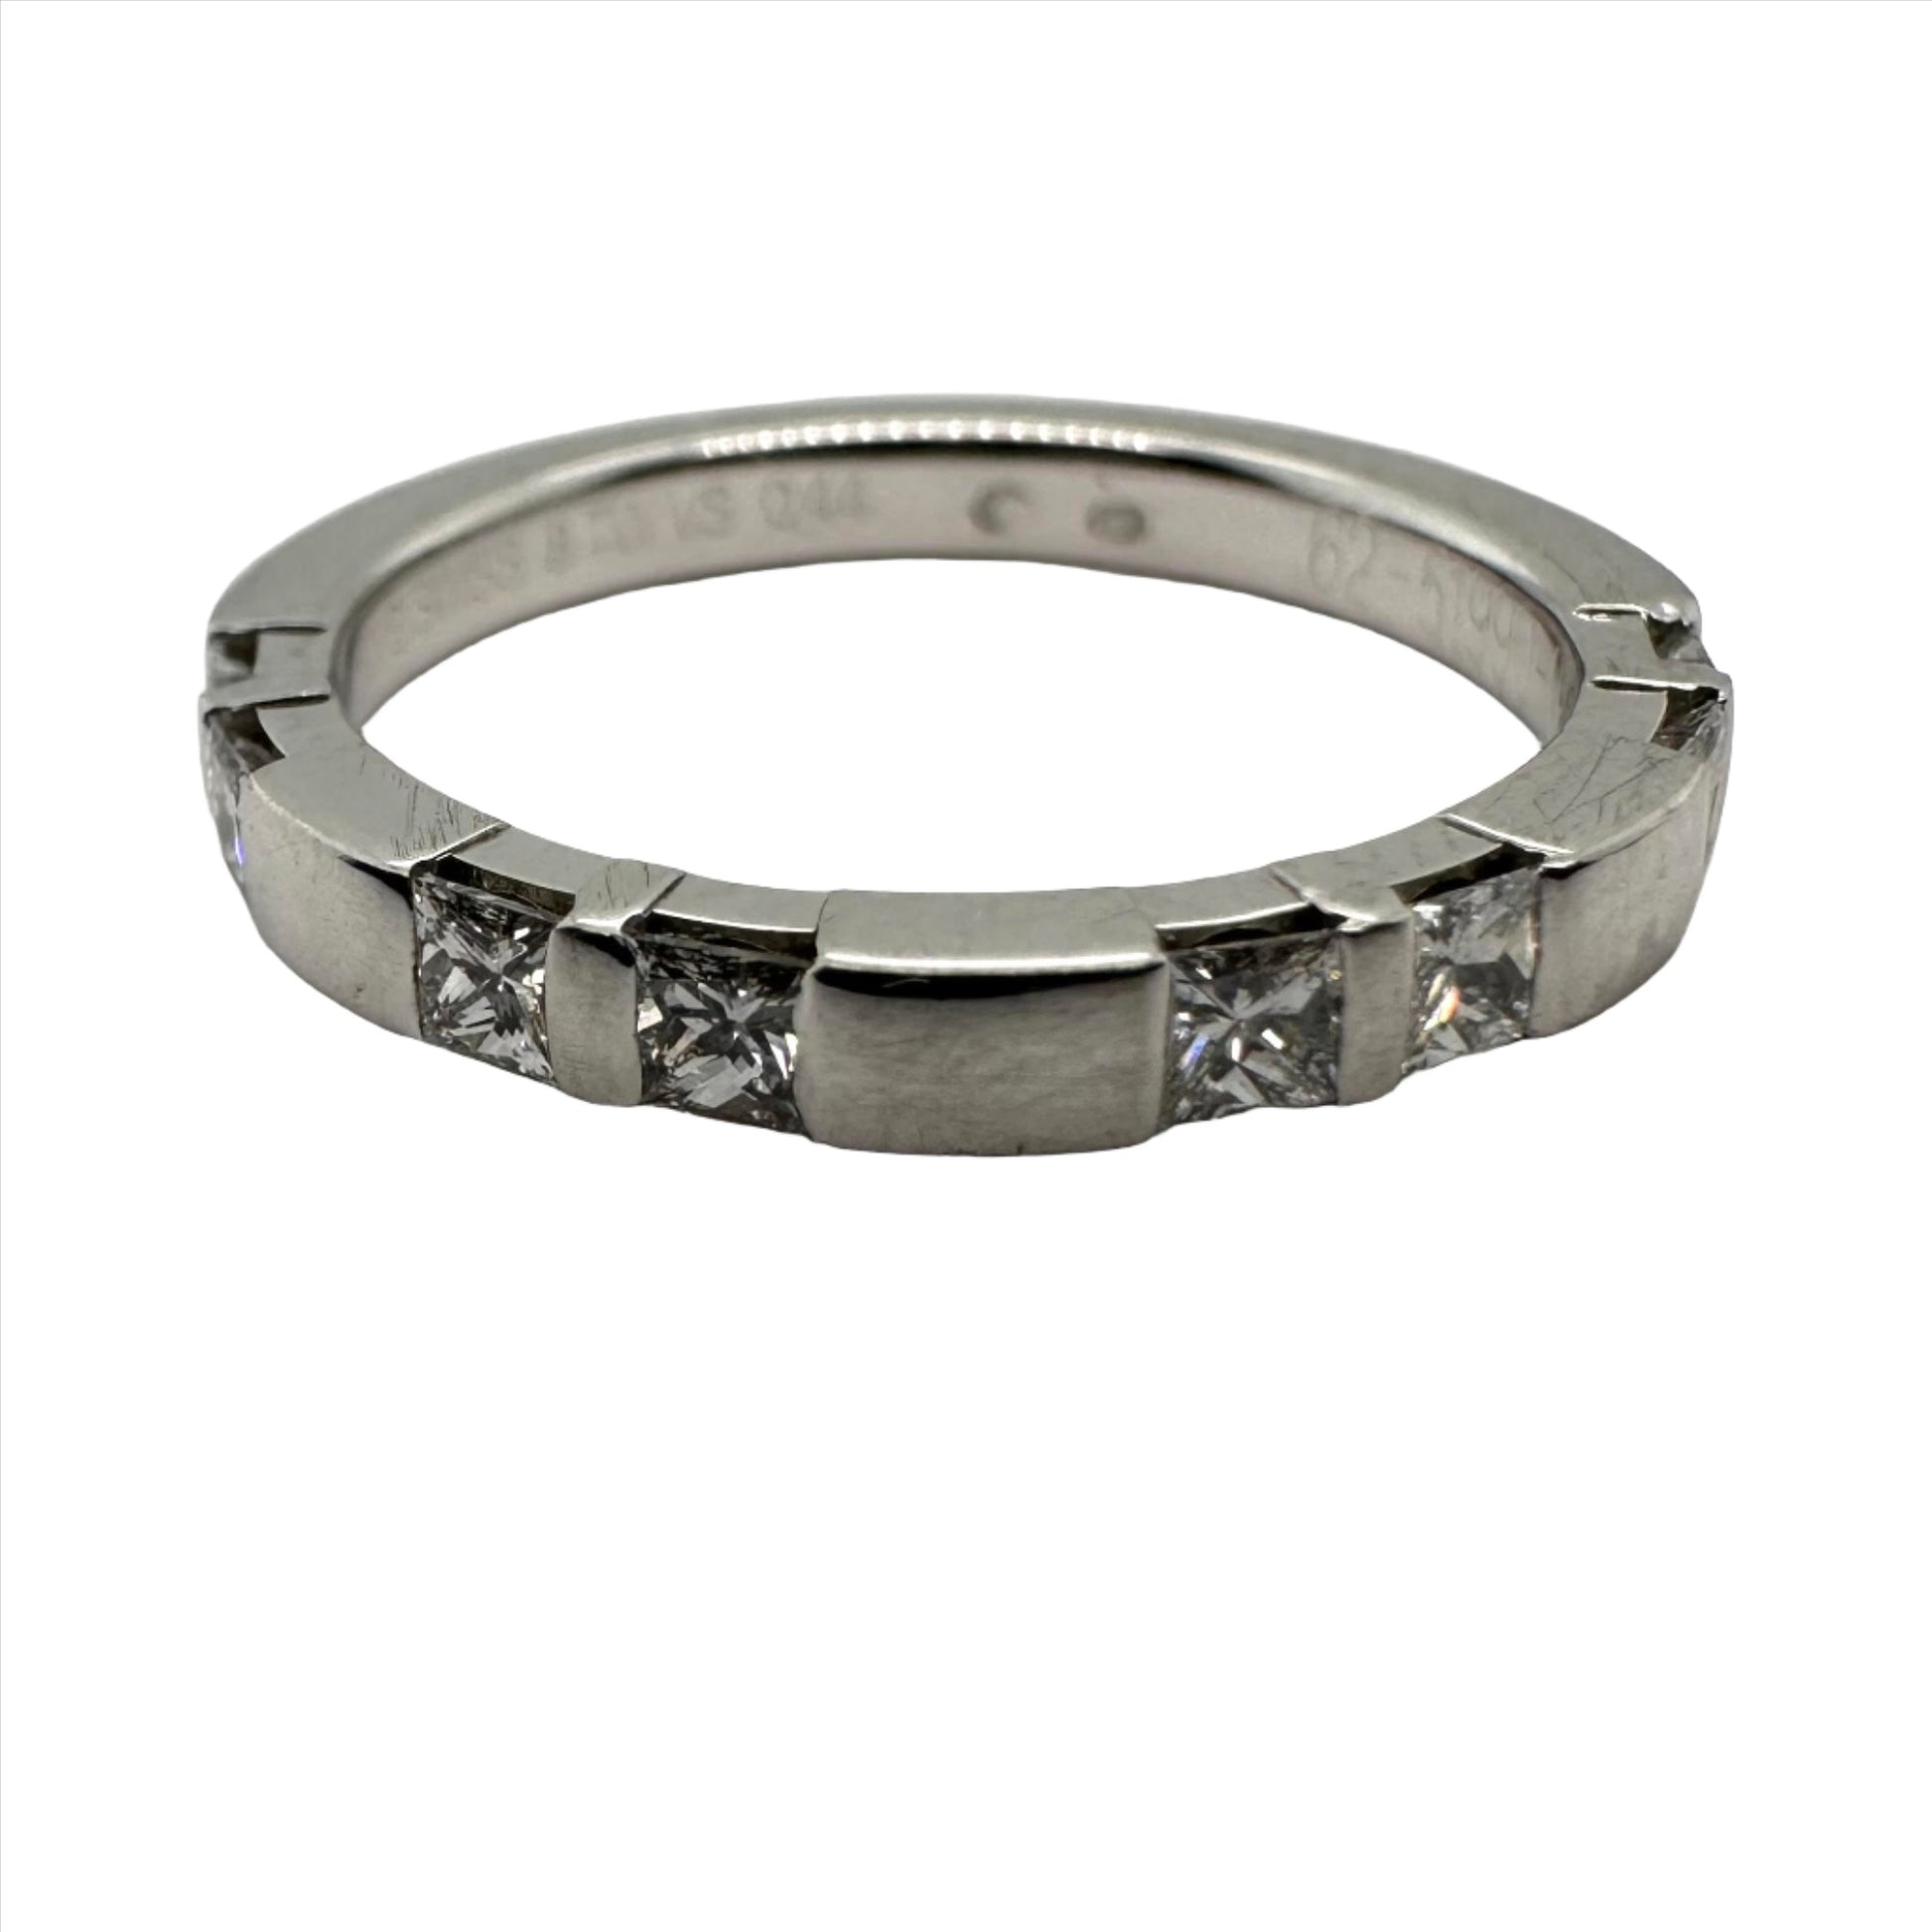 Platinum ring with 8 princess cut diamonds